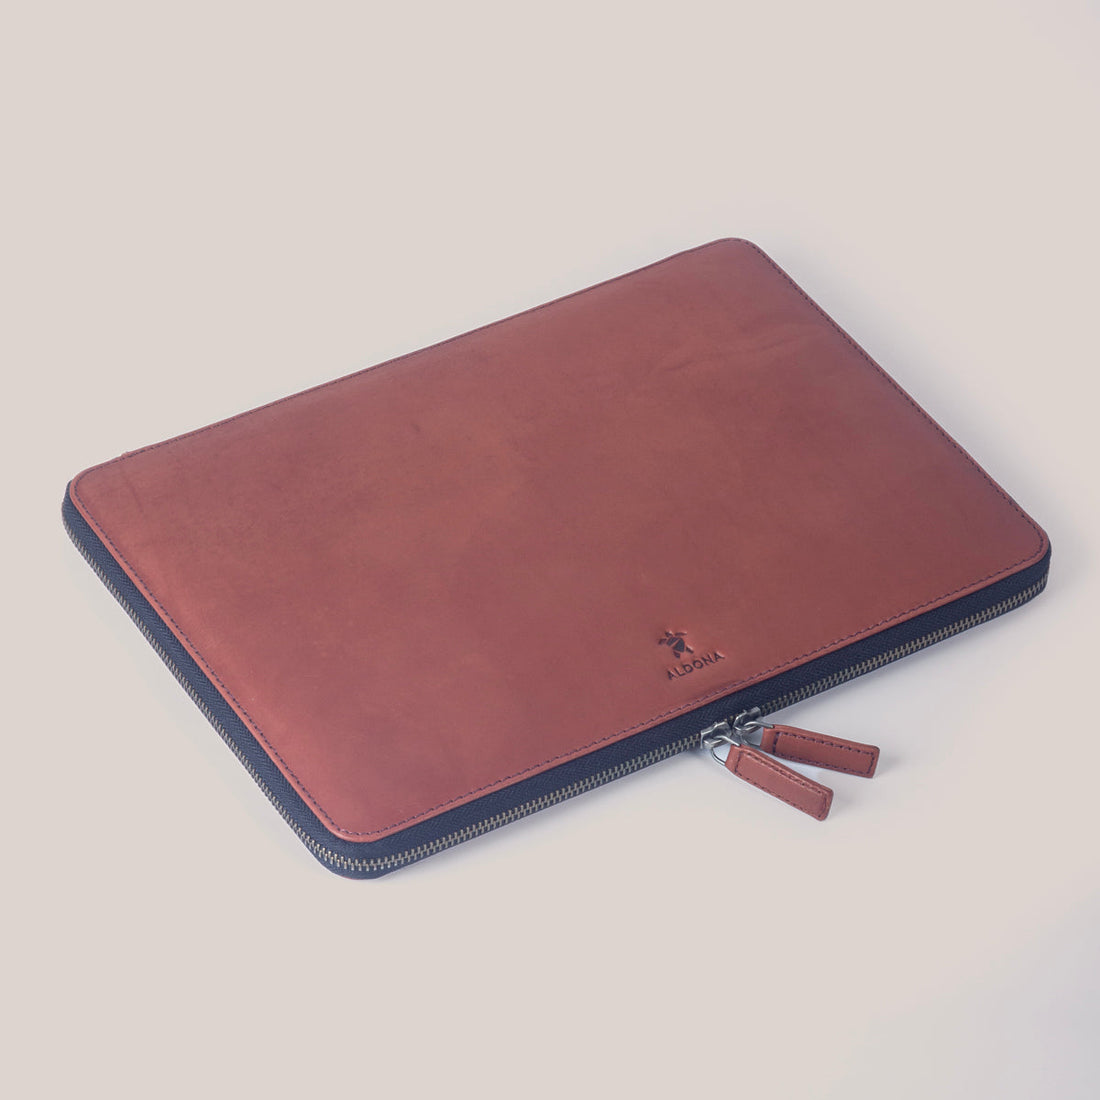 MacBook Pro 16 Zippered Laptop Case - Onyx Black